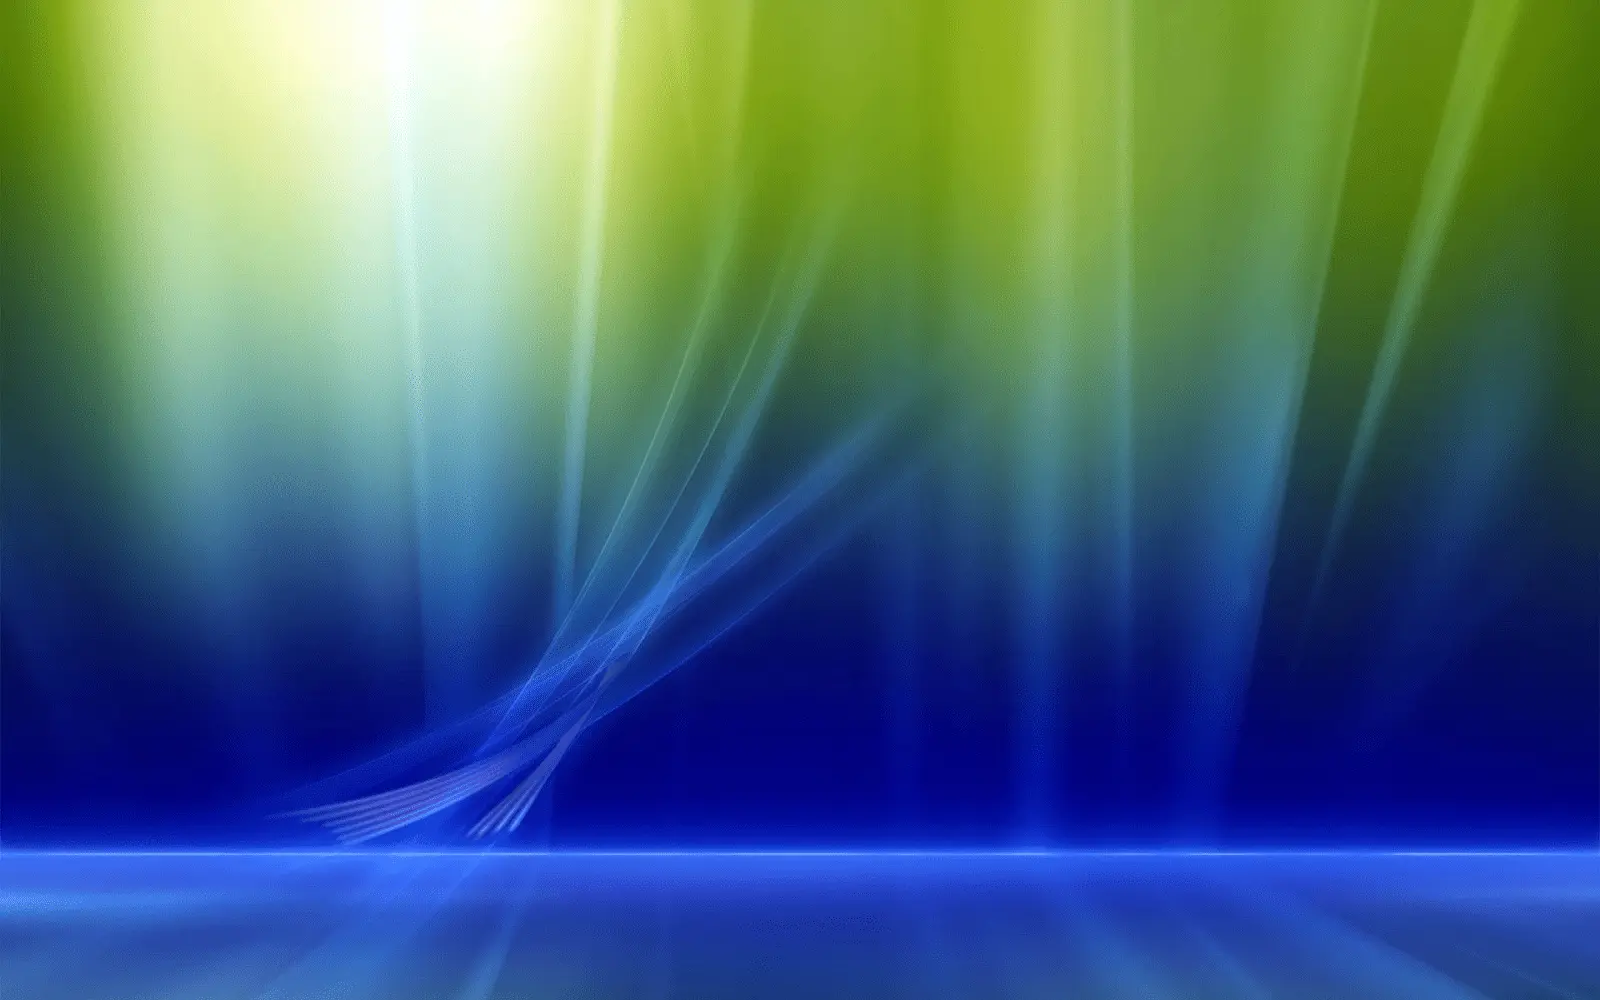 An example of the Frutiger Aurora aesthetic, showcasing aurora borealis-inspired visuals